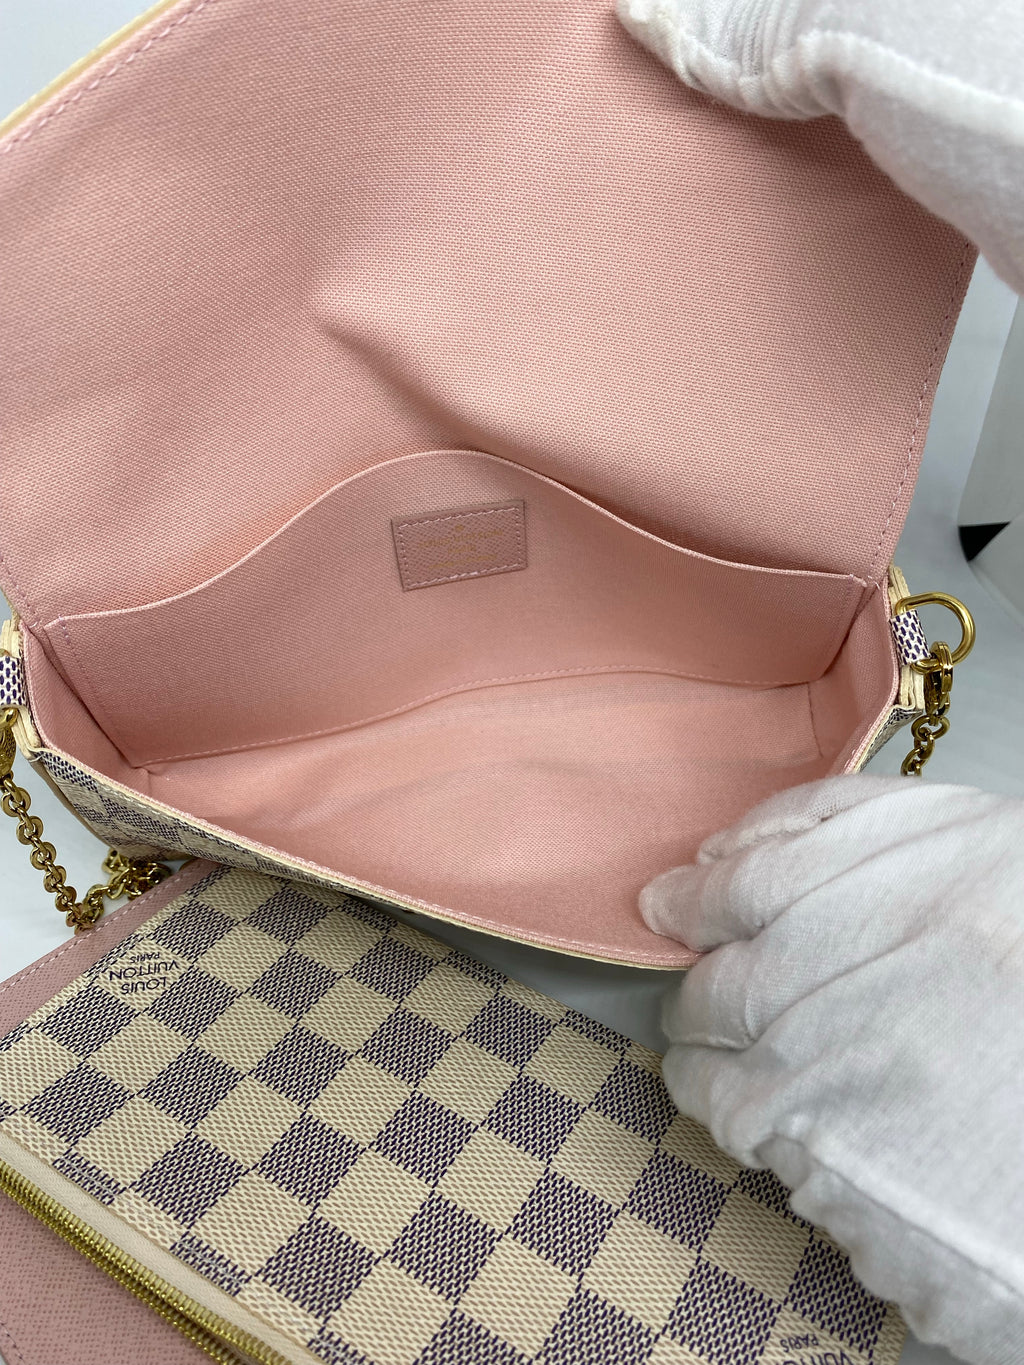 Louis Vuitton Pochette Felicie Damier Azur Bag White